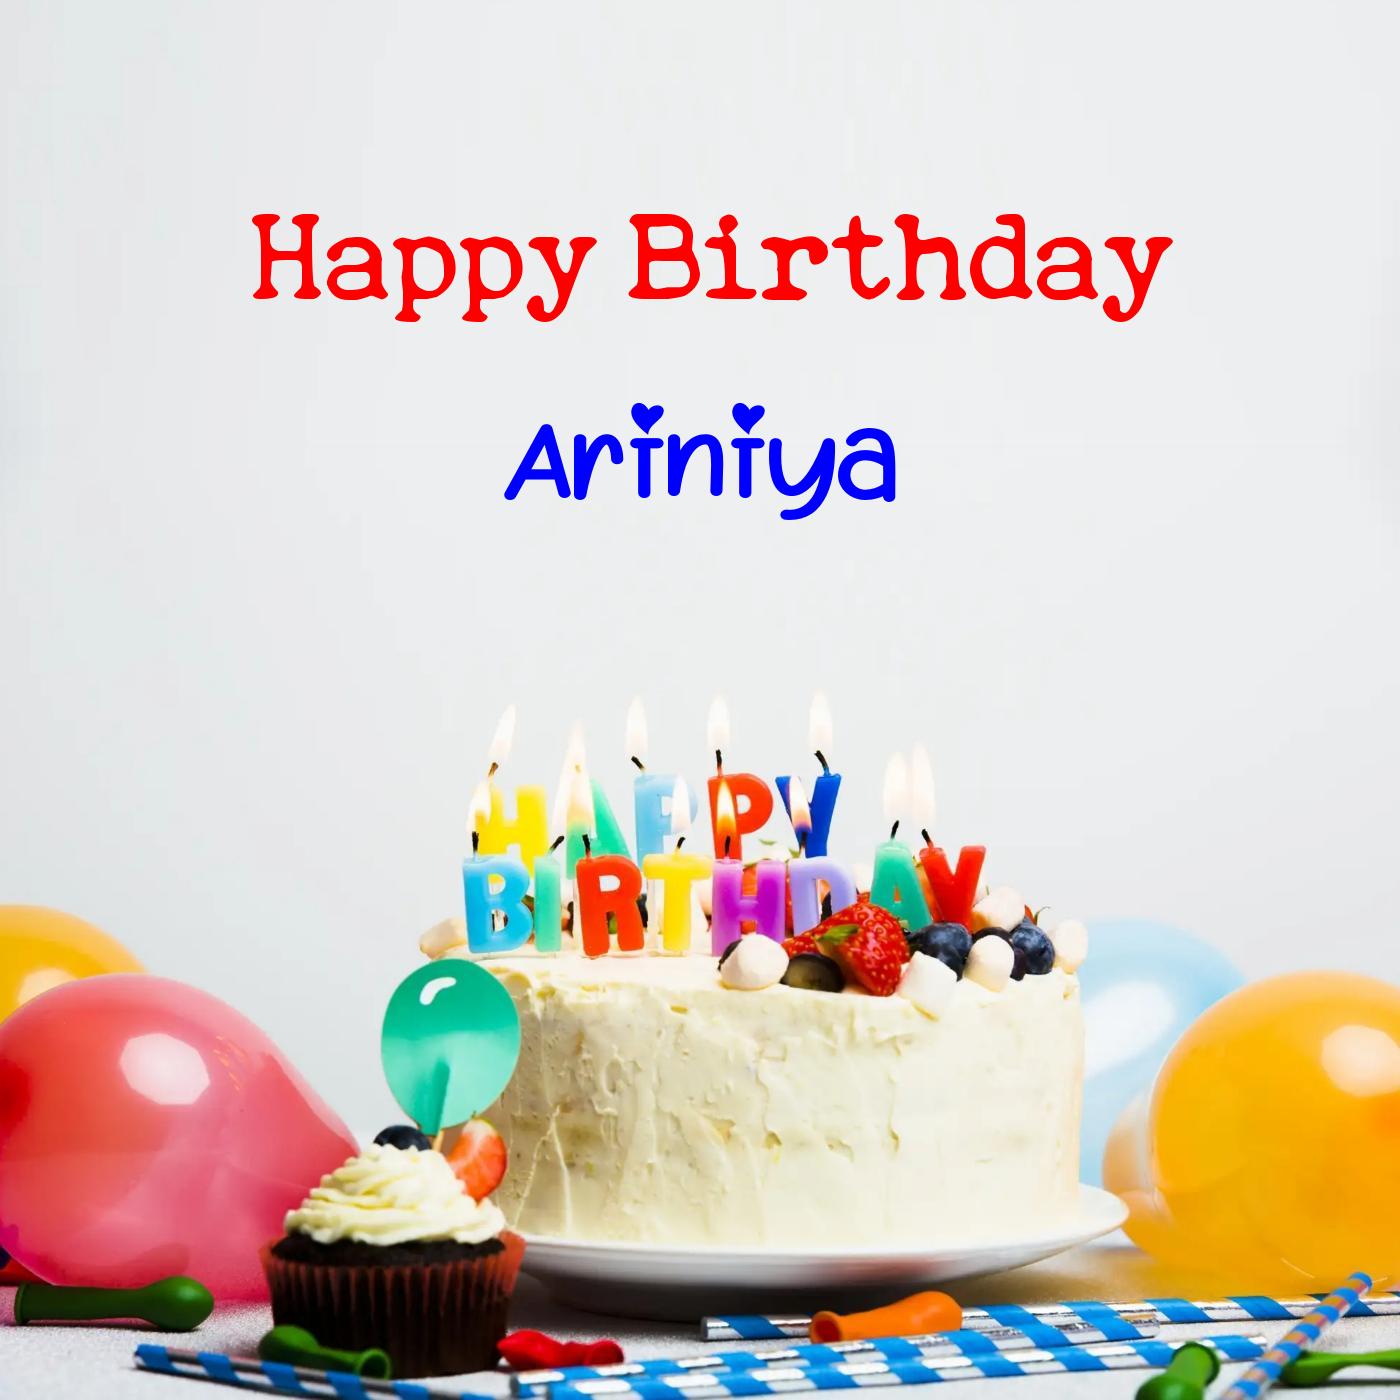 Happy Birthday Ariniya Cake Balloons Card